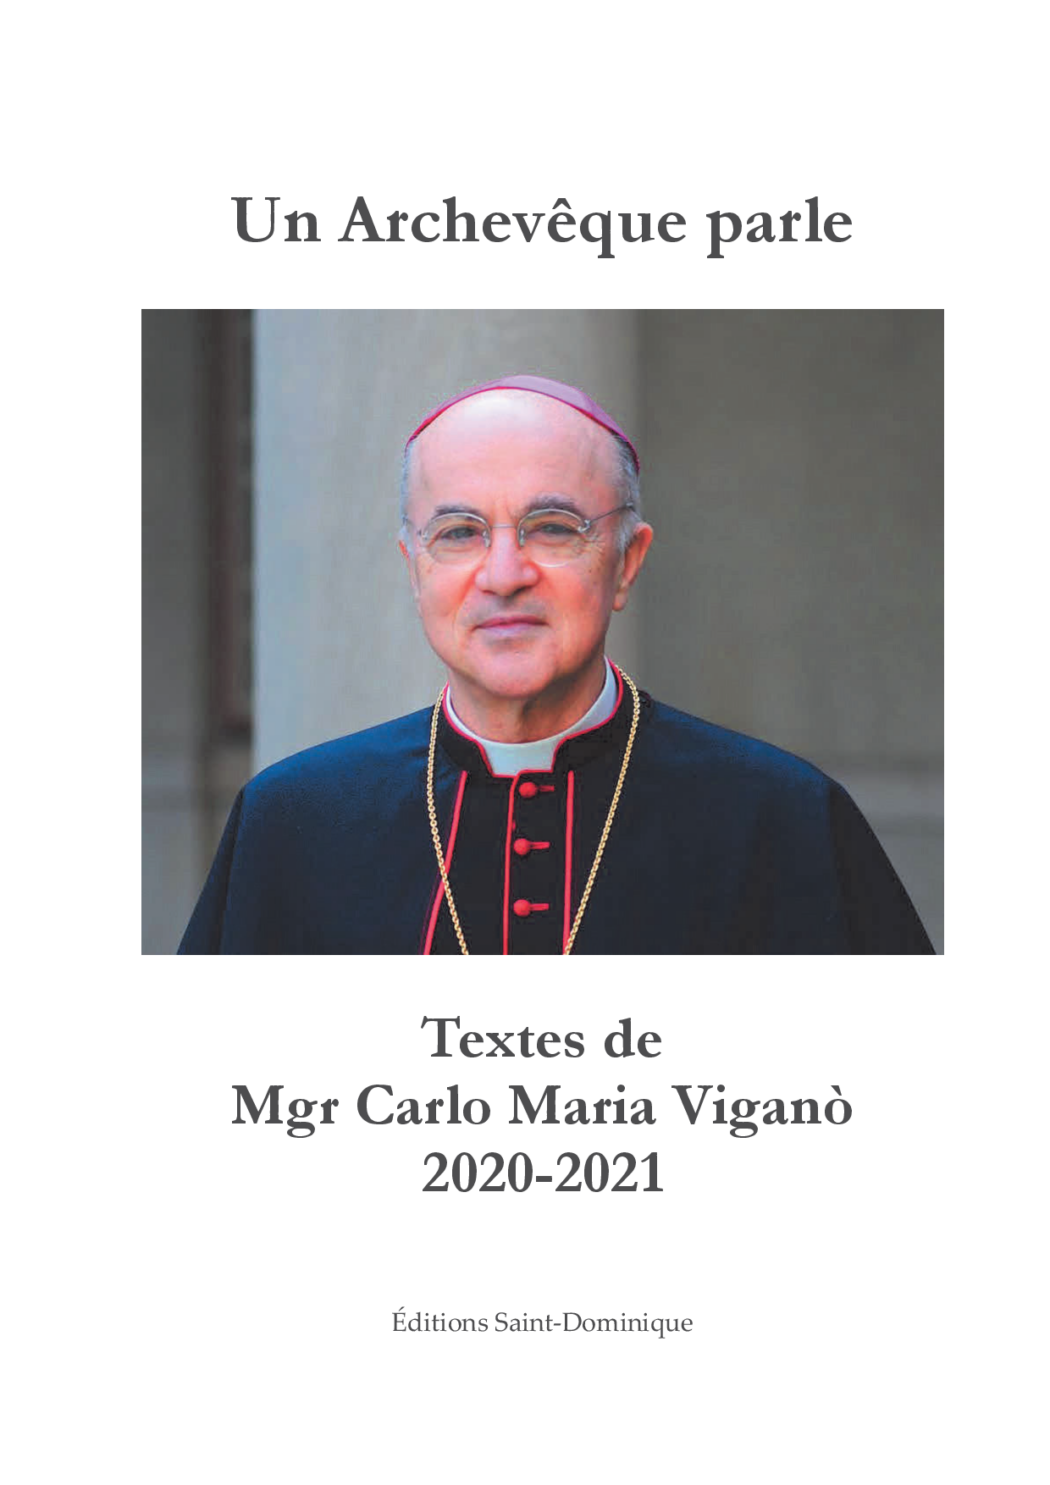 Un archevêque parle – Textes de Mgr Carlo-Maria Viganò 2020-2021